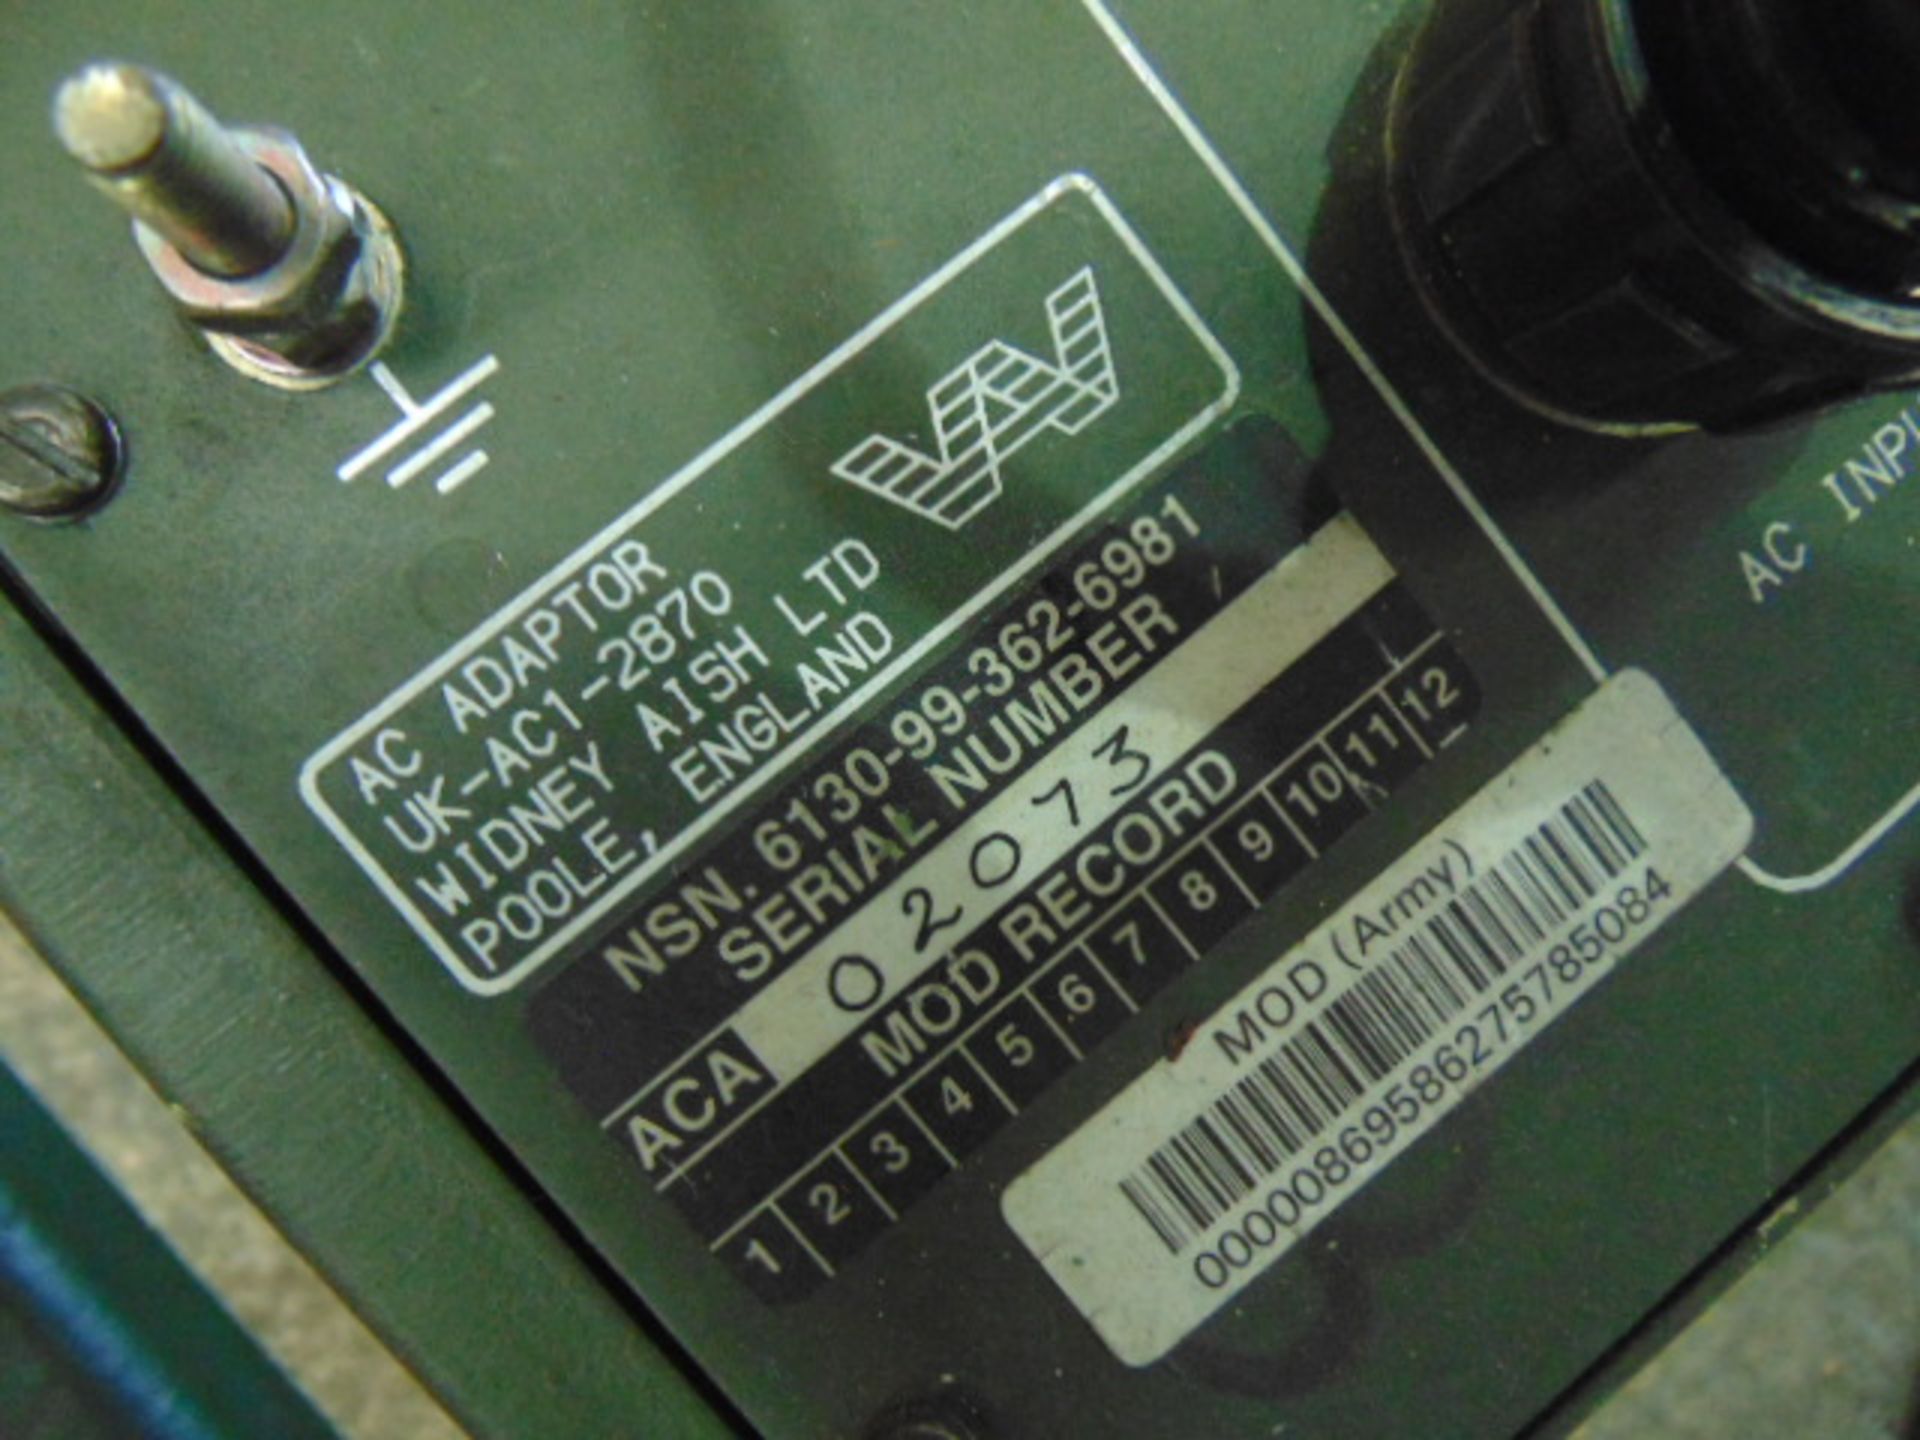 Clansman 240V AC Adaptor - Image 3 of 3